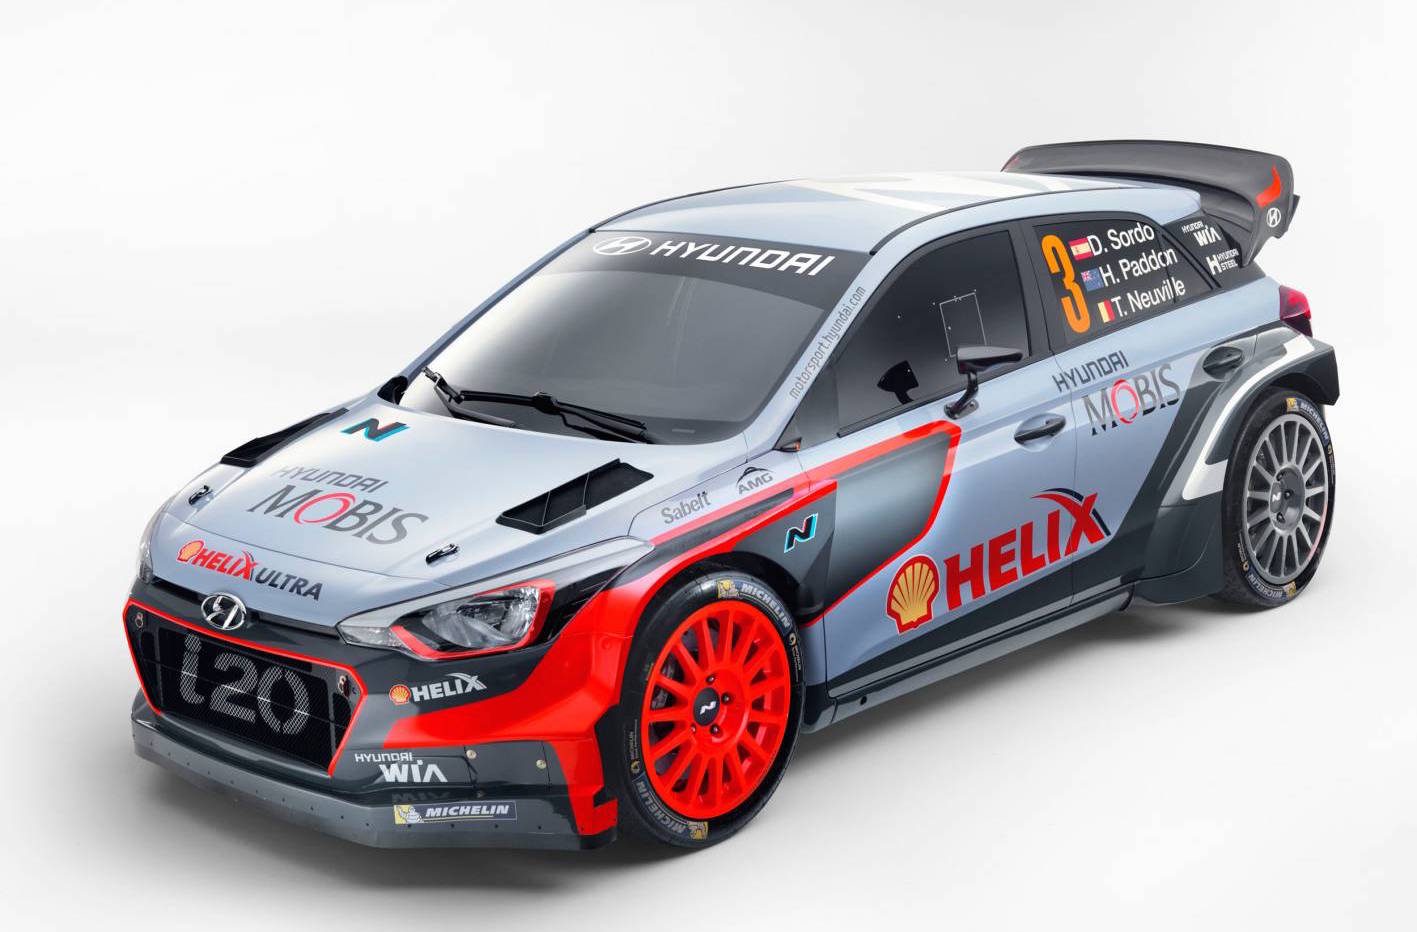 2016 Hyundai i20 WRC car revealed